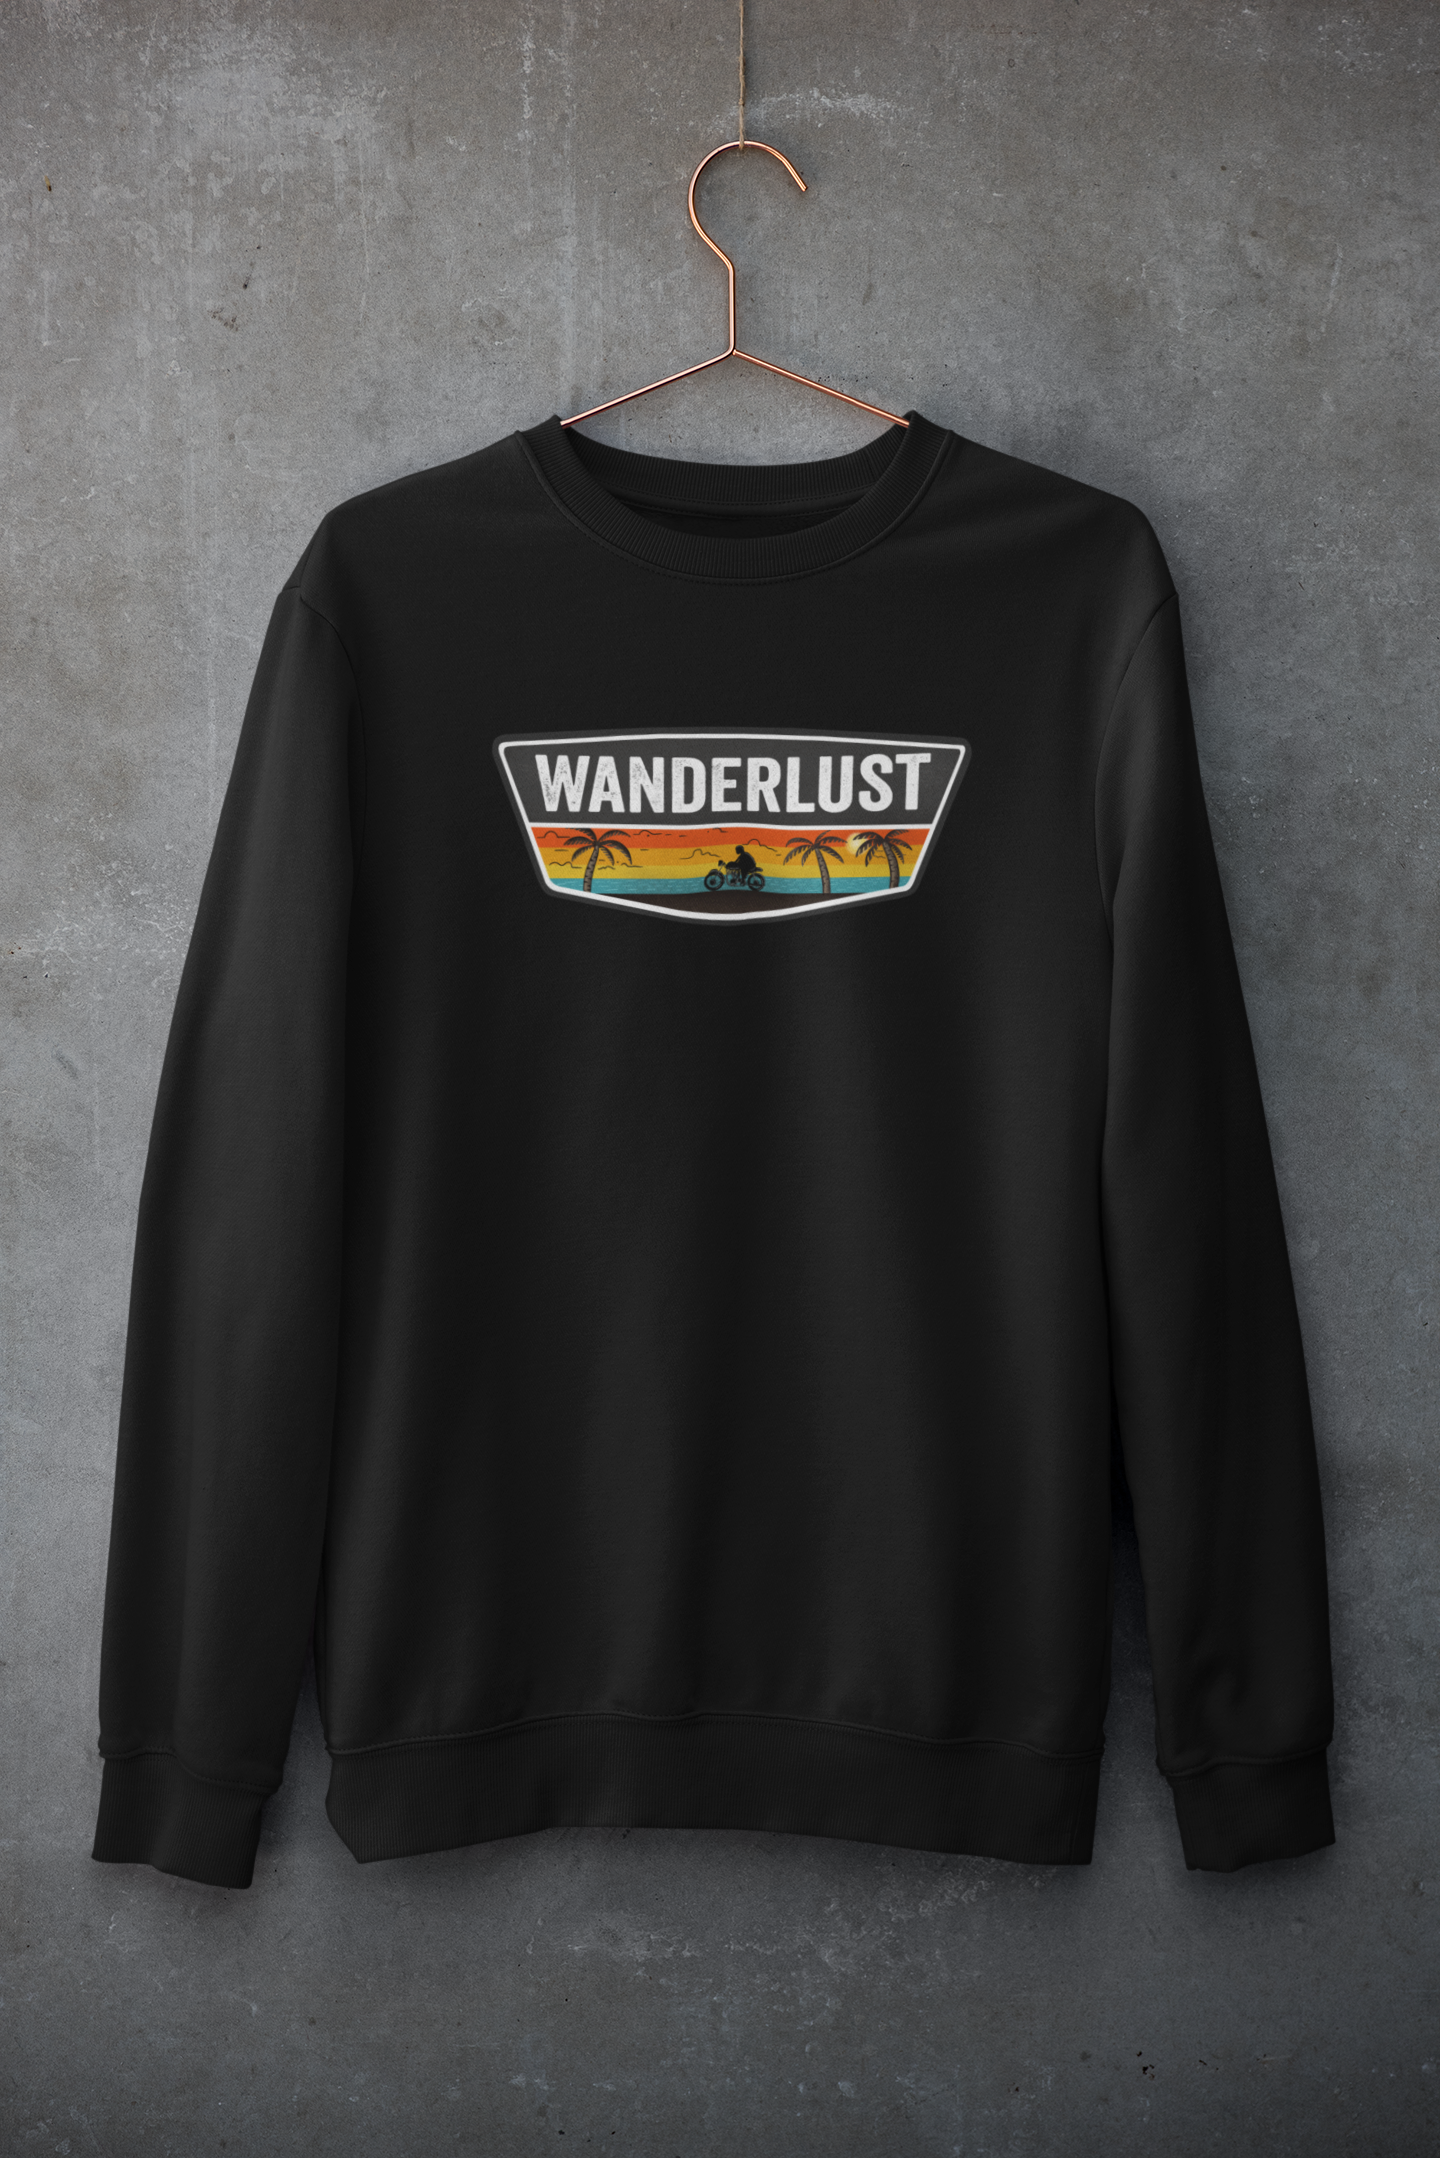 Wanderlust : Motoexplorer Club - Winter Sweatshirts